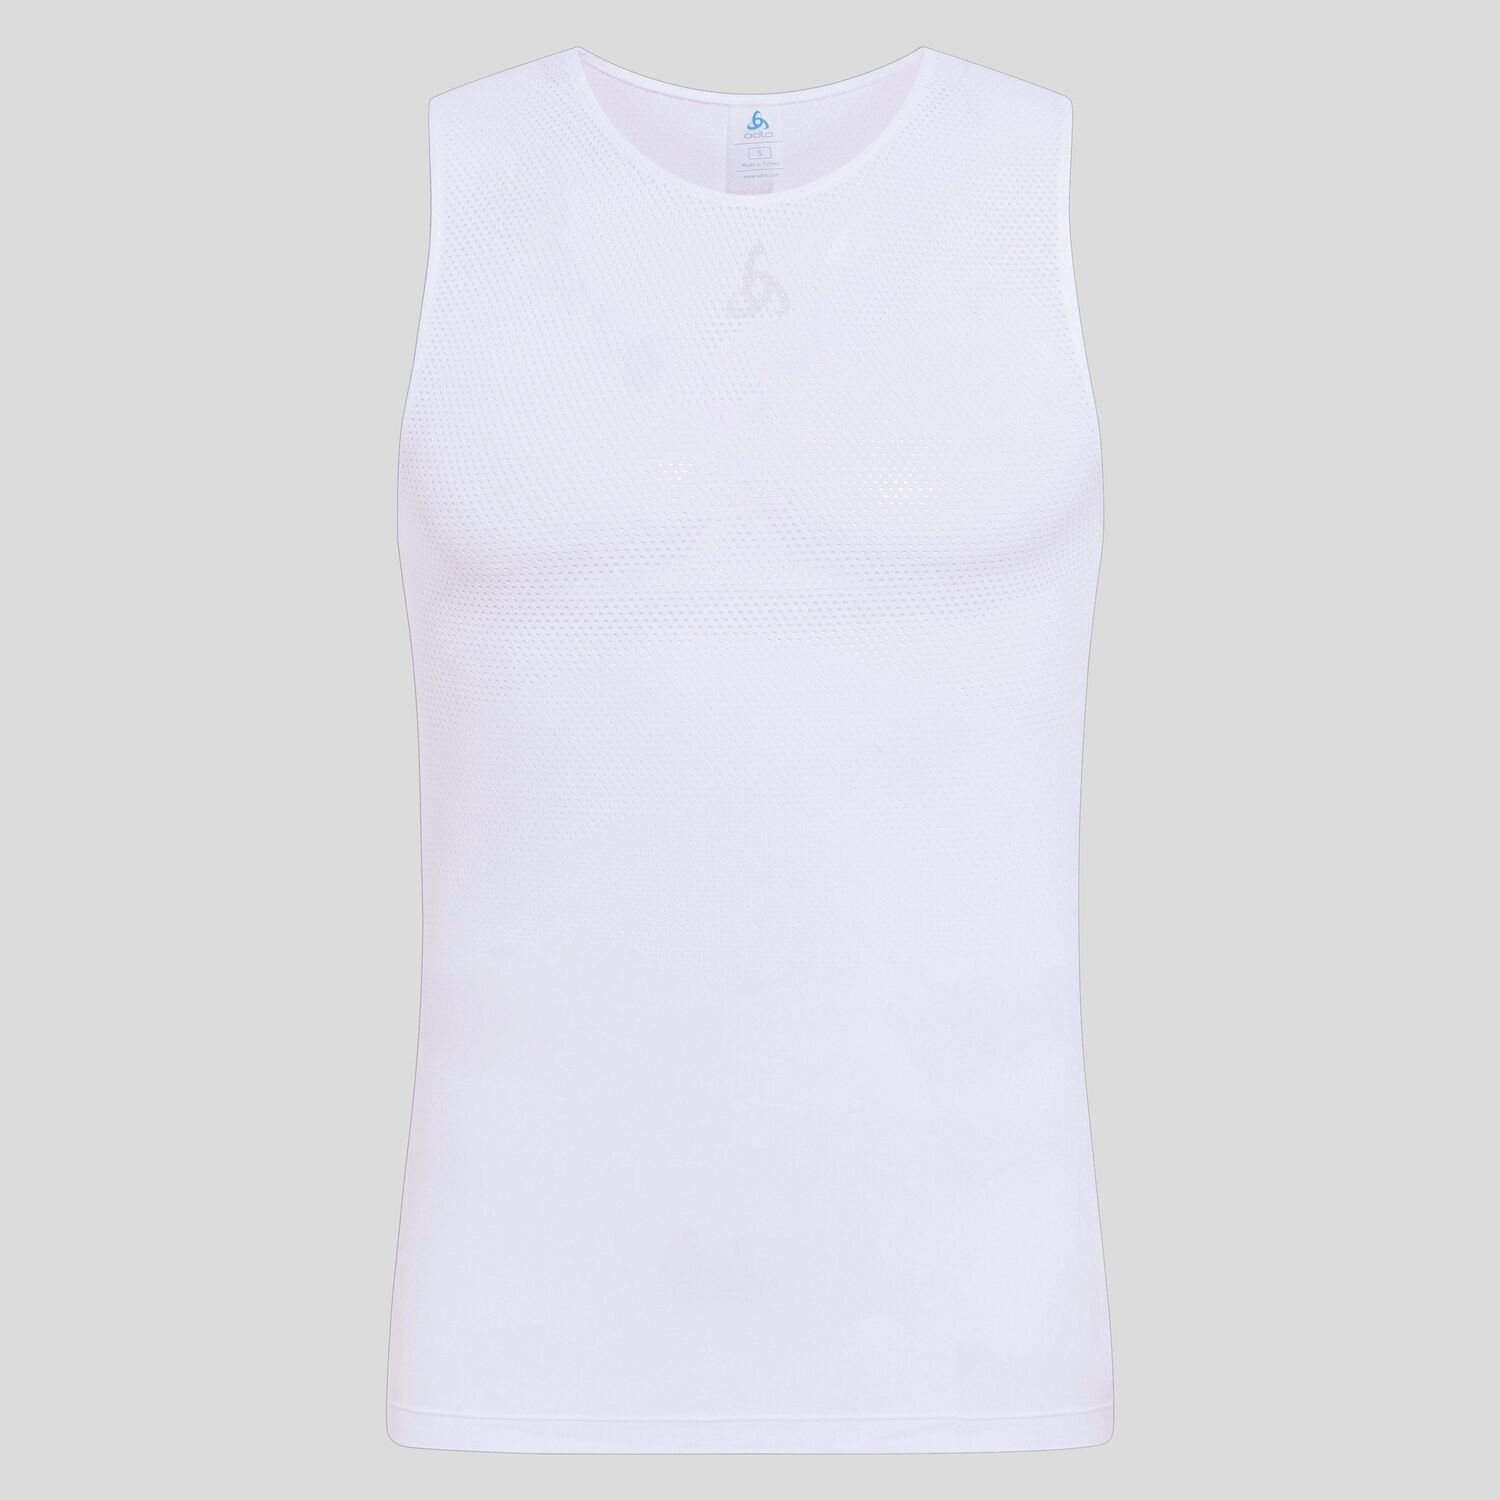 Odlo Zeroweight - Camiseta sin mangas - Hombre | Hardloop